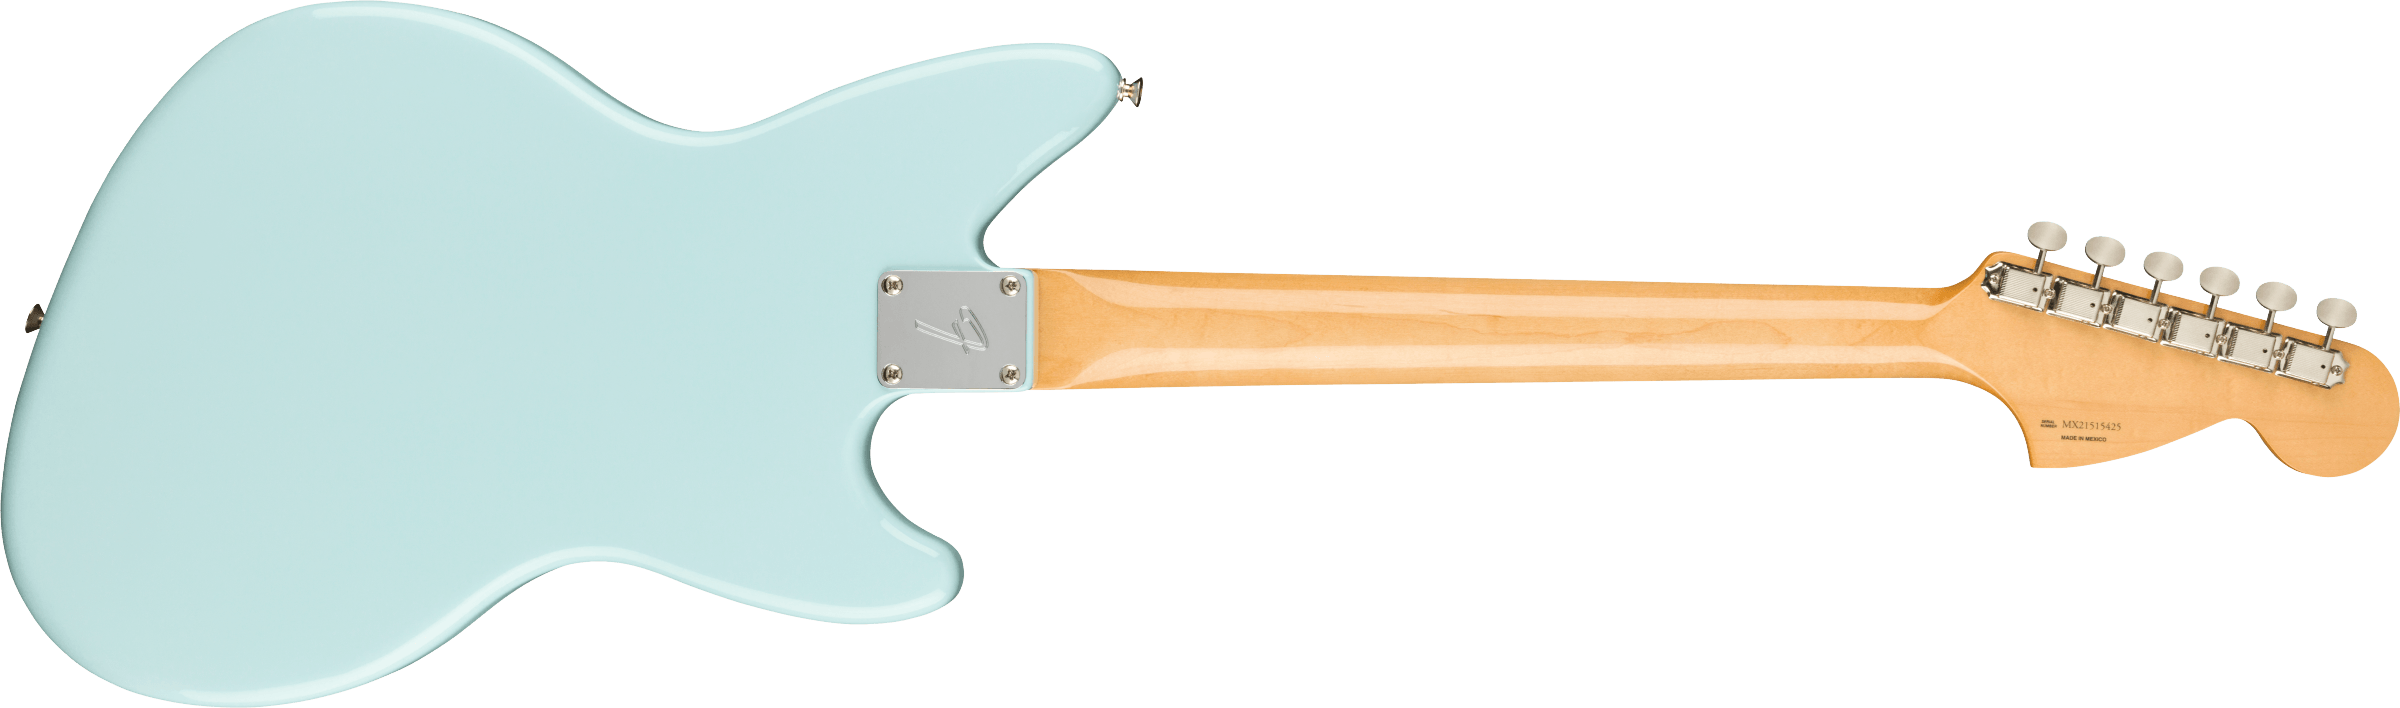 Fender Jag-stang Kurt Cobain Artist Gaucher Hs Trem Rw - Sonic Blue - Guitarra electrica para zurdos - Variation 1